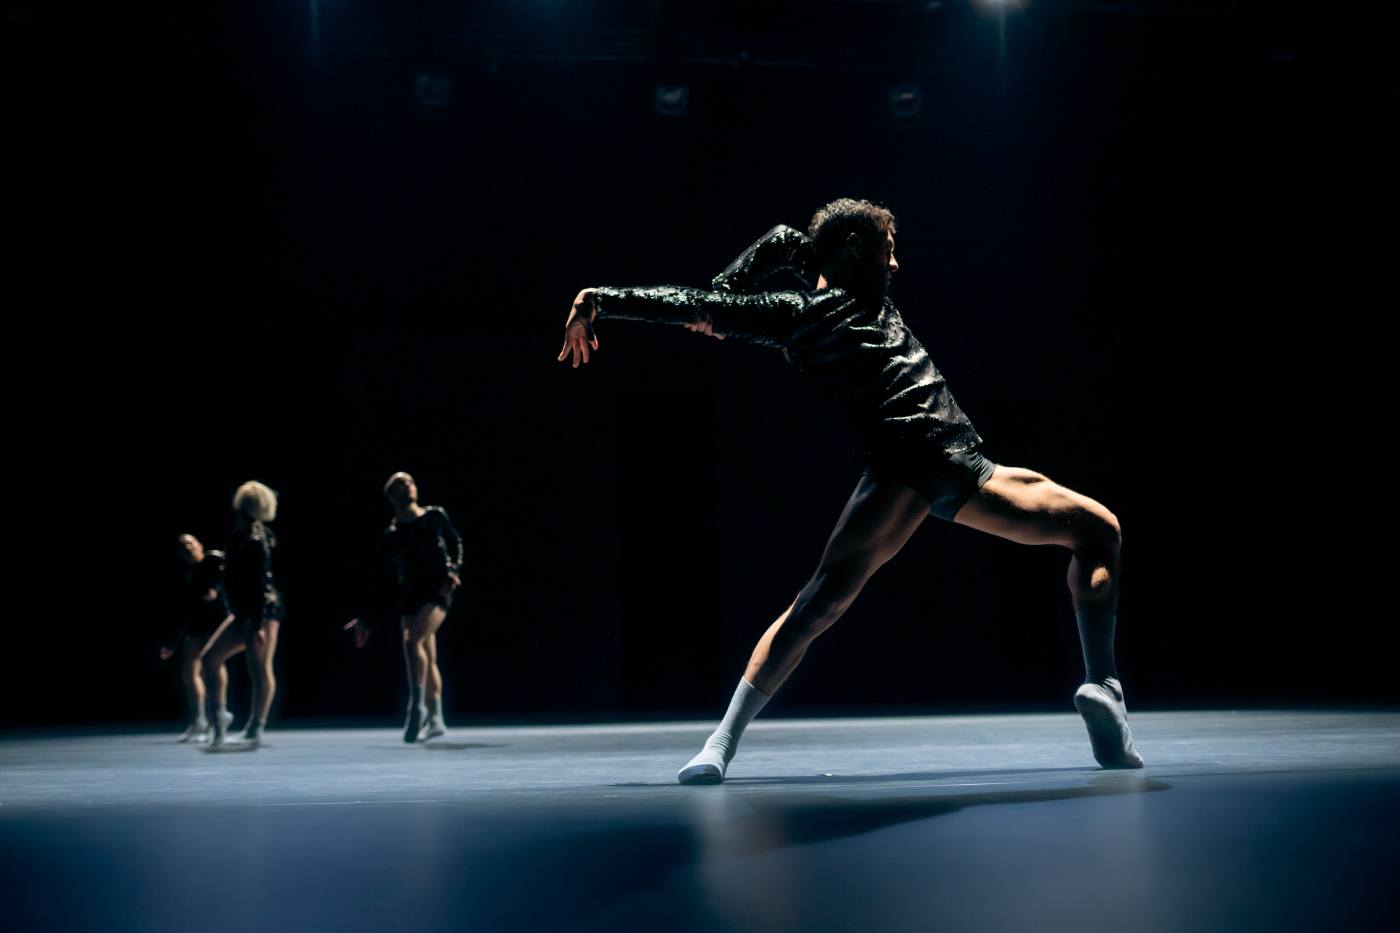 6. N.Martinéz and ensemble, “Metric Dozen” by R.Siegal, Richard Siegal – Ballet of Difference 2023 © T.Schermer